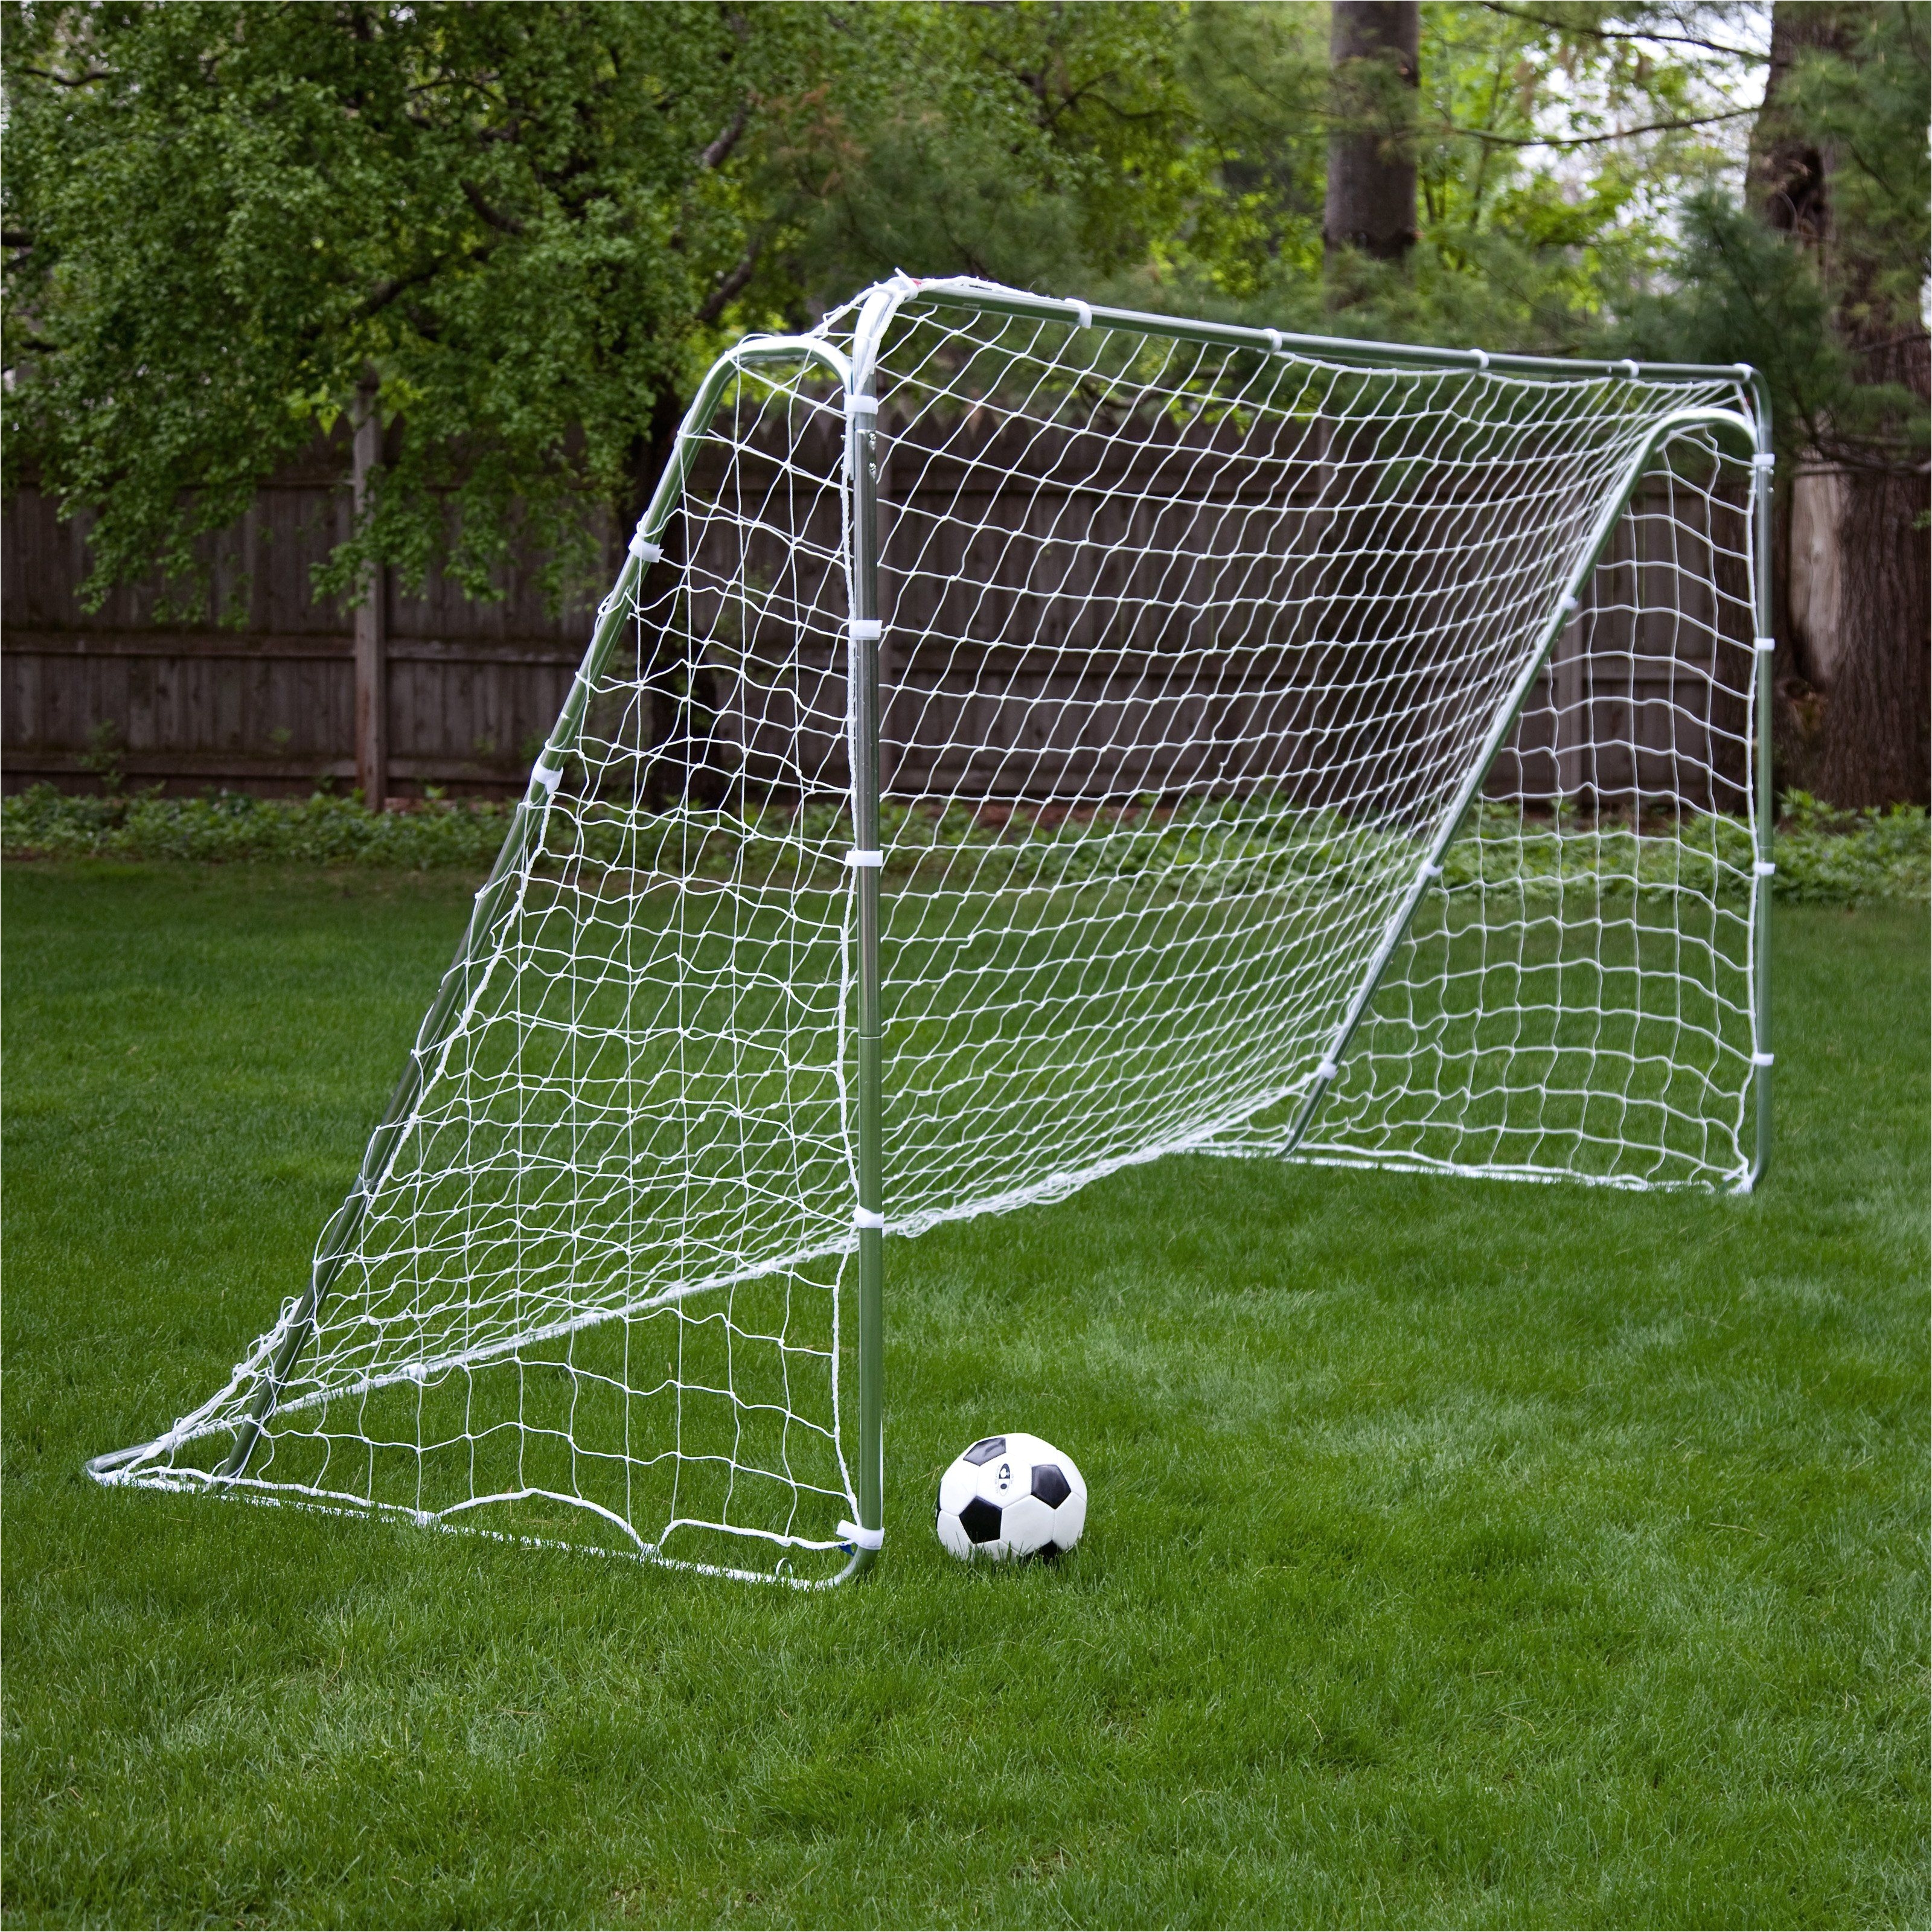 franklin tournament steel portable soccer goal 12 x 6 79 99 hayneedle